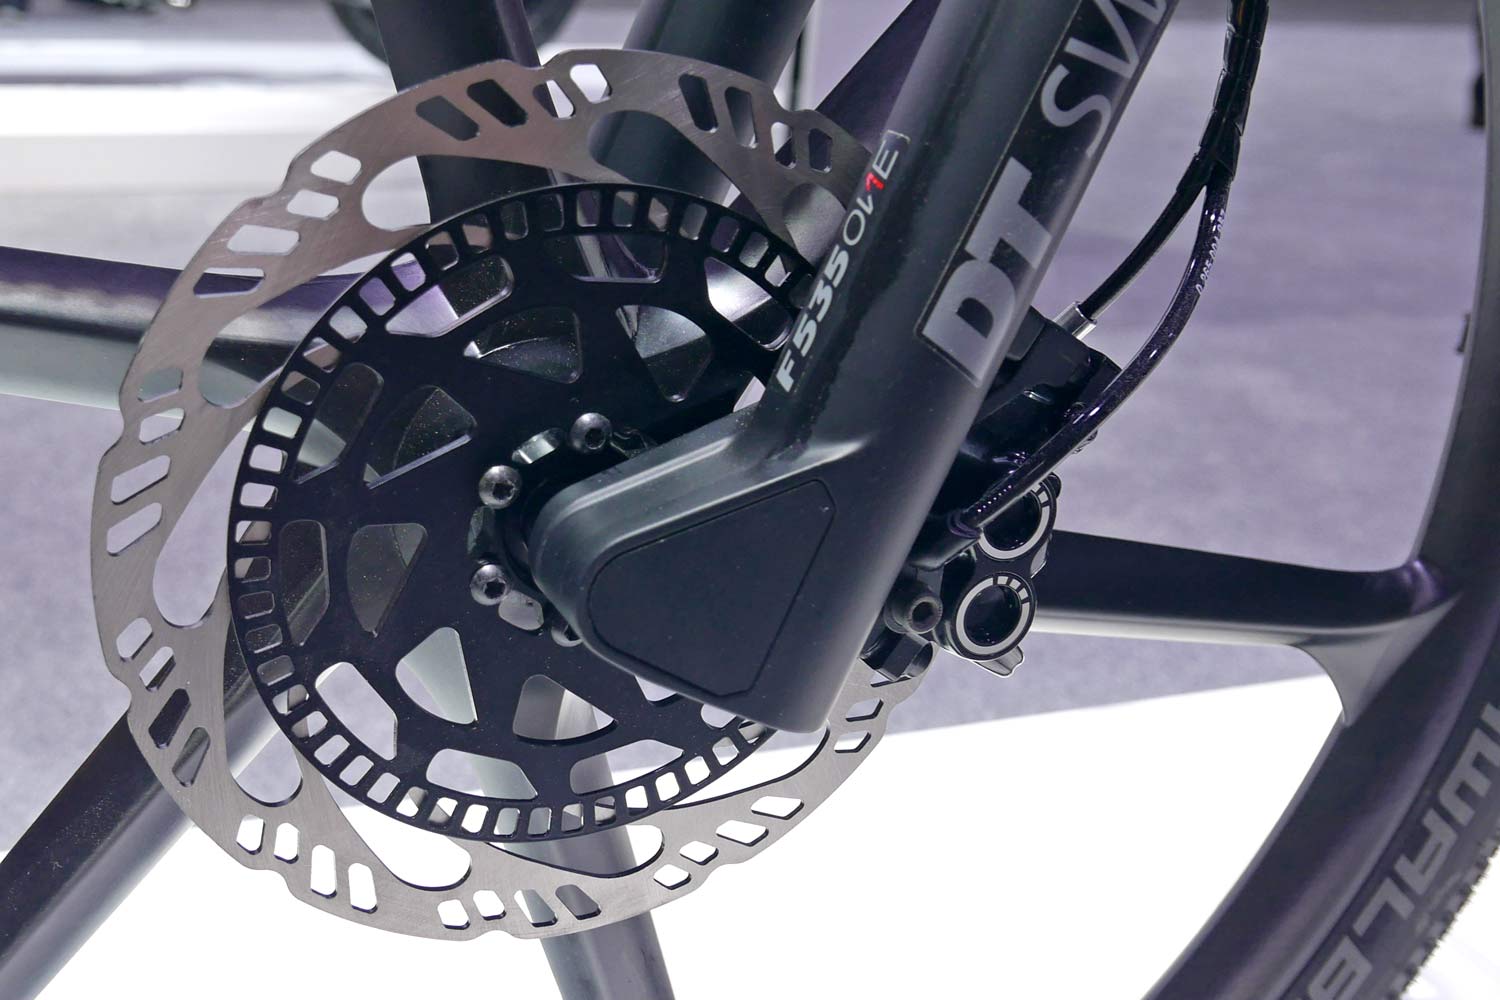 Bosch eBike ABS prototype e-bike with integrated anti-lock braking, front brake